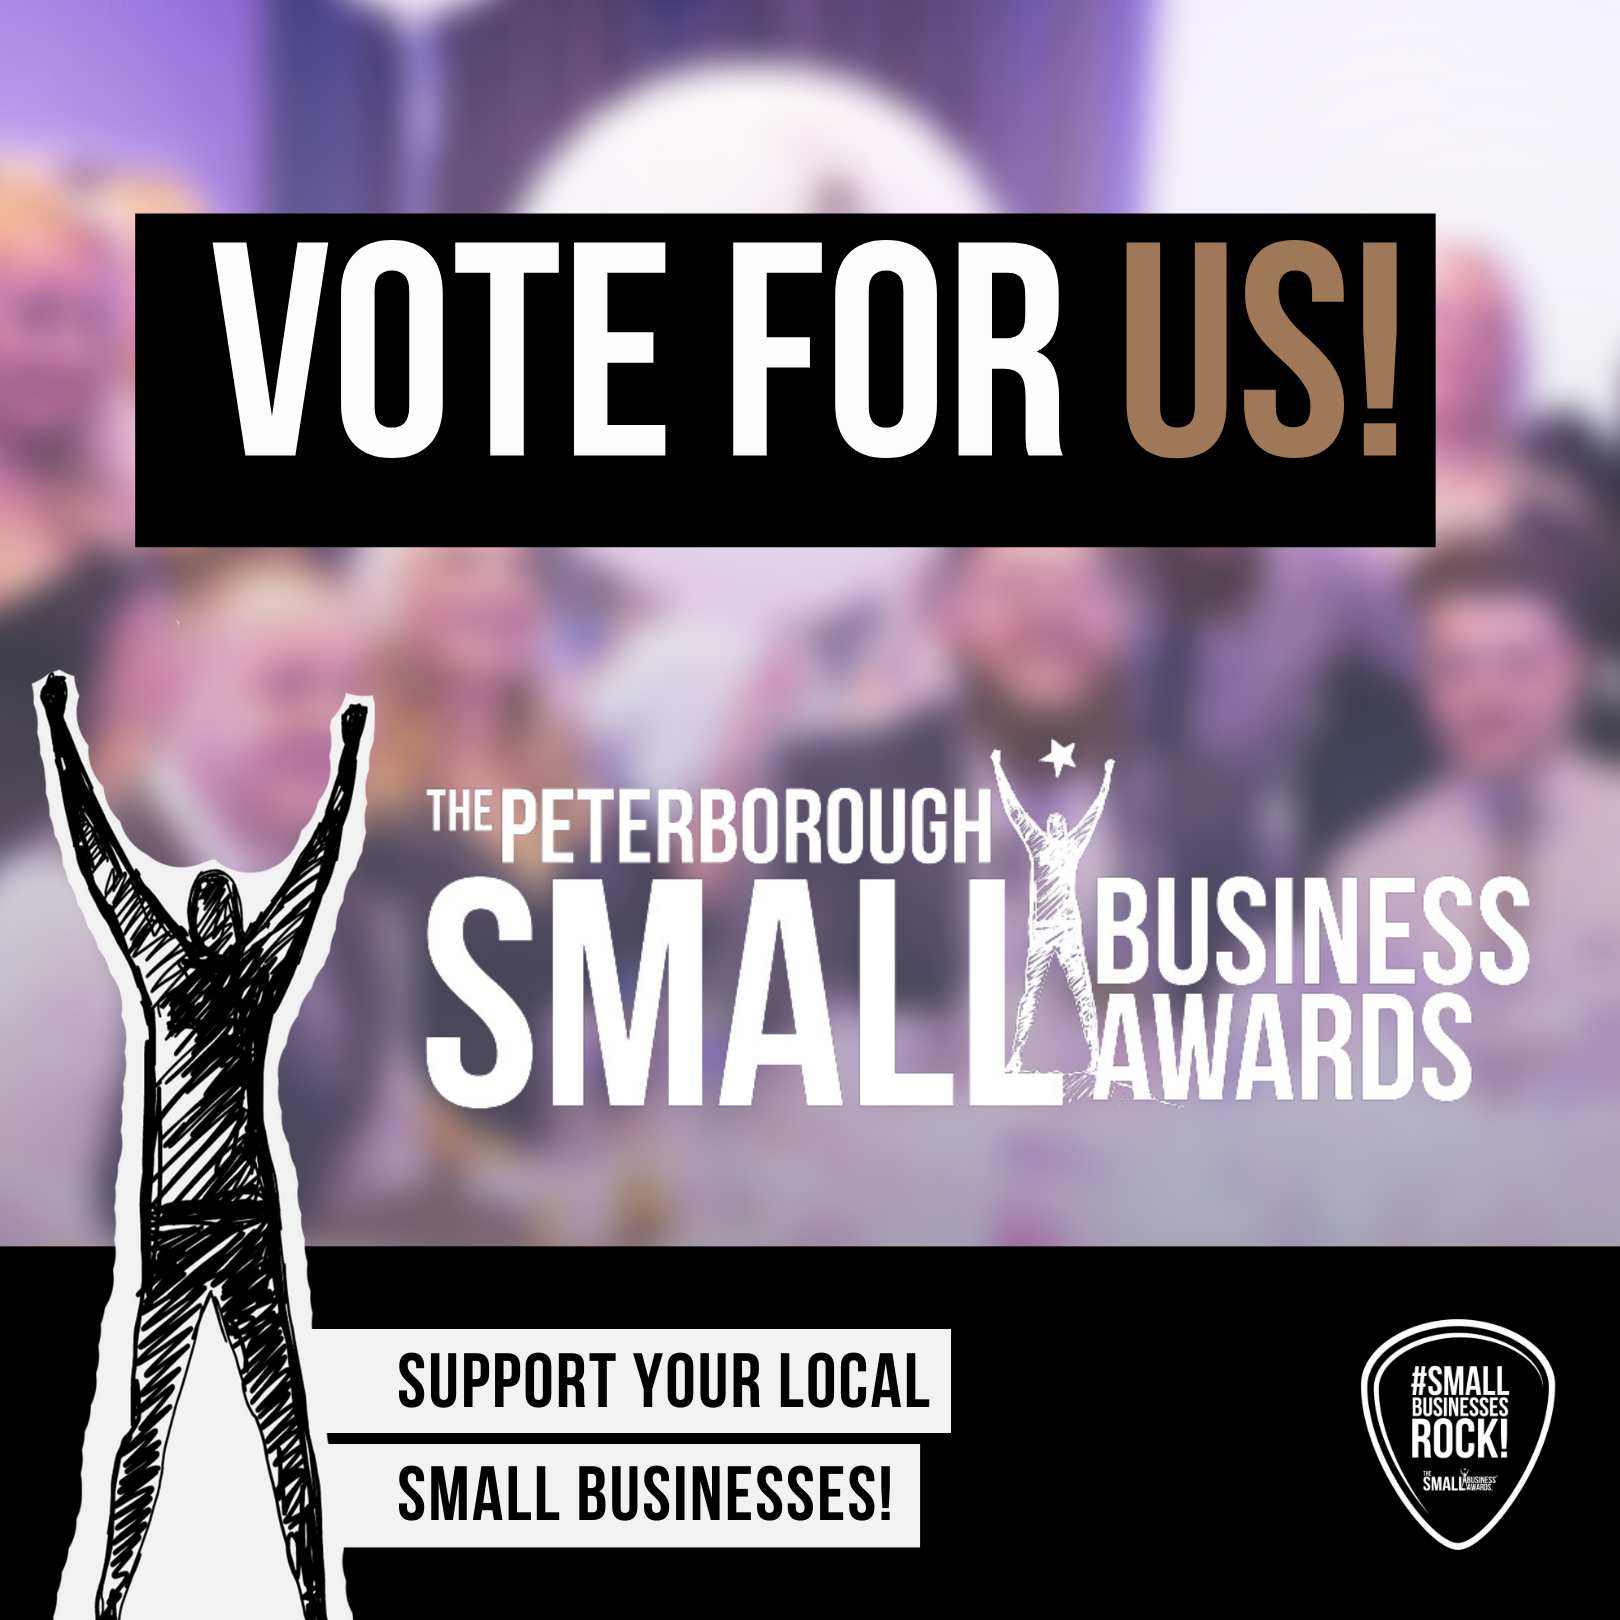 Small Business Award Finalists 2024!